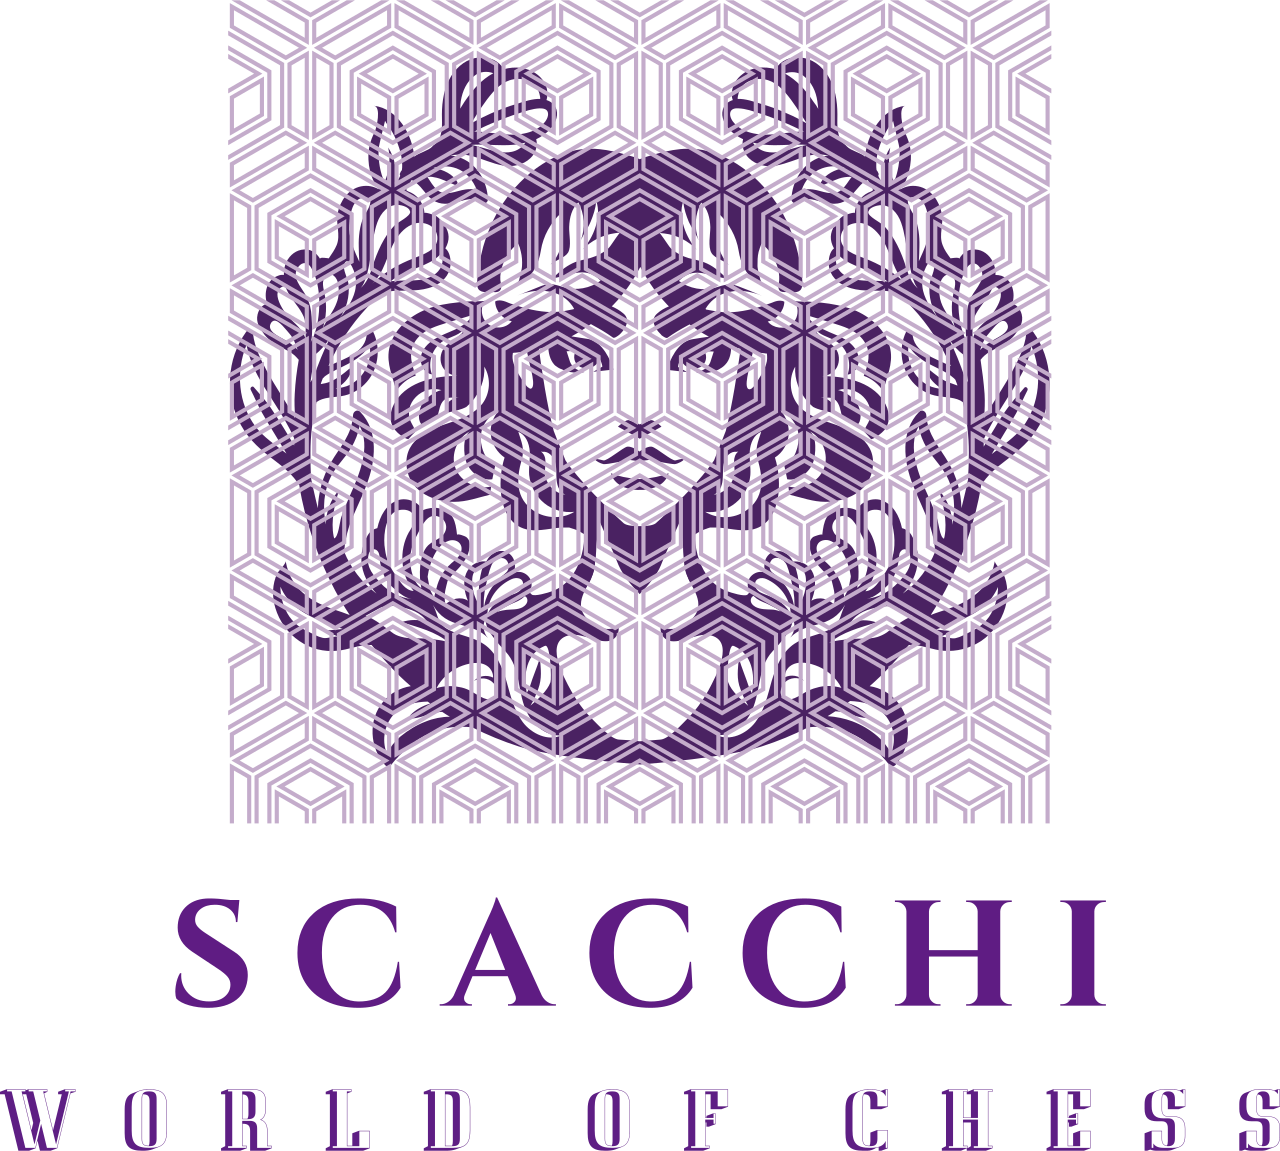 Scacchi's logo